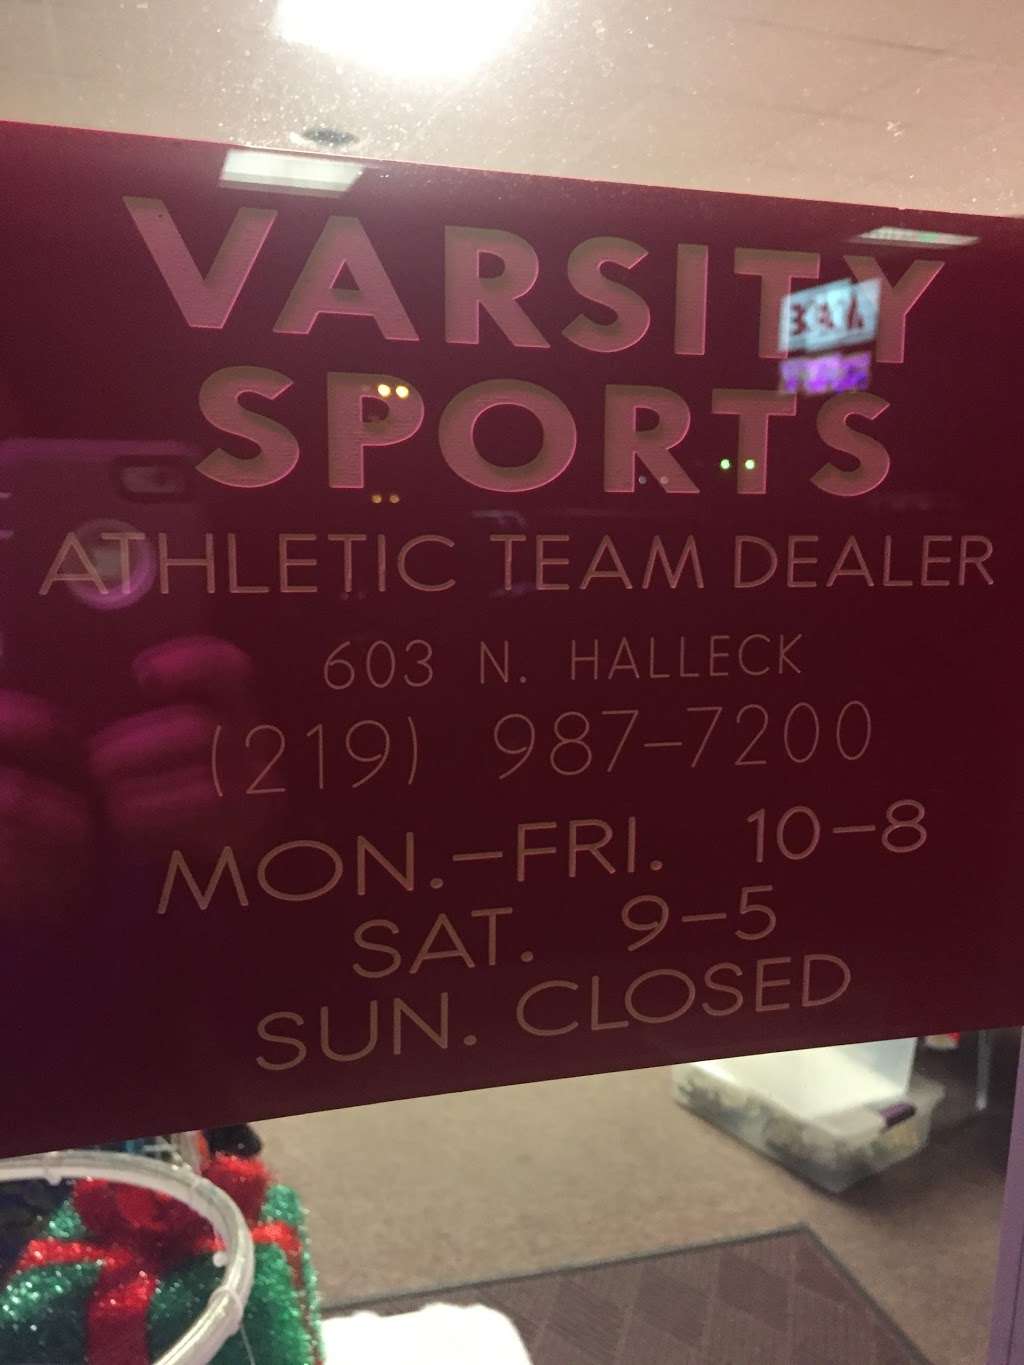 Varsity Sports Inc | 603 N Halleck St, De Motte, IN 46310 | Phone: (219) 987-7200